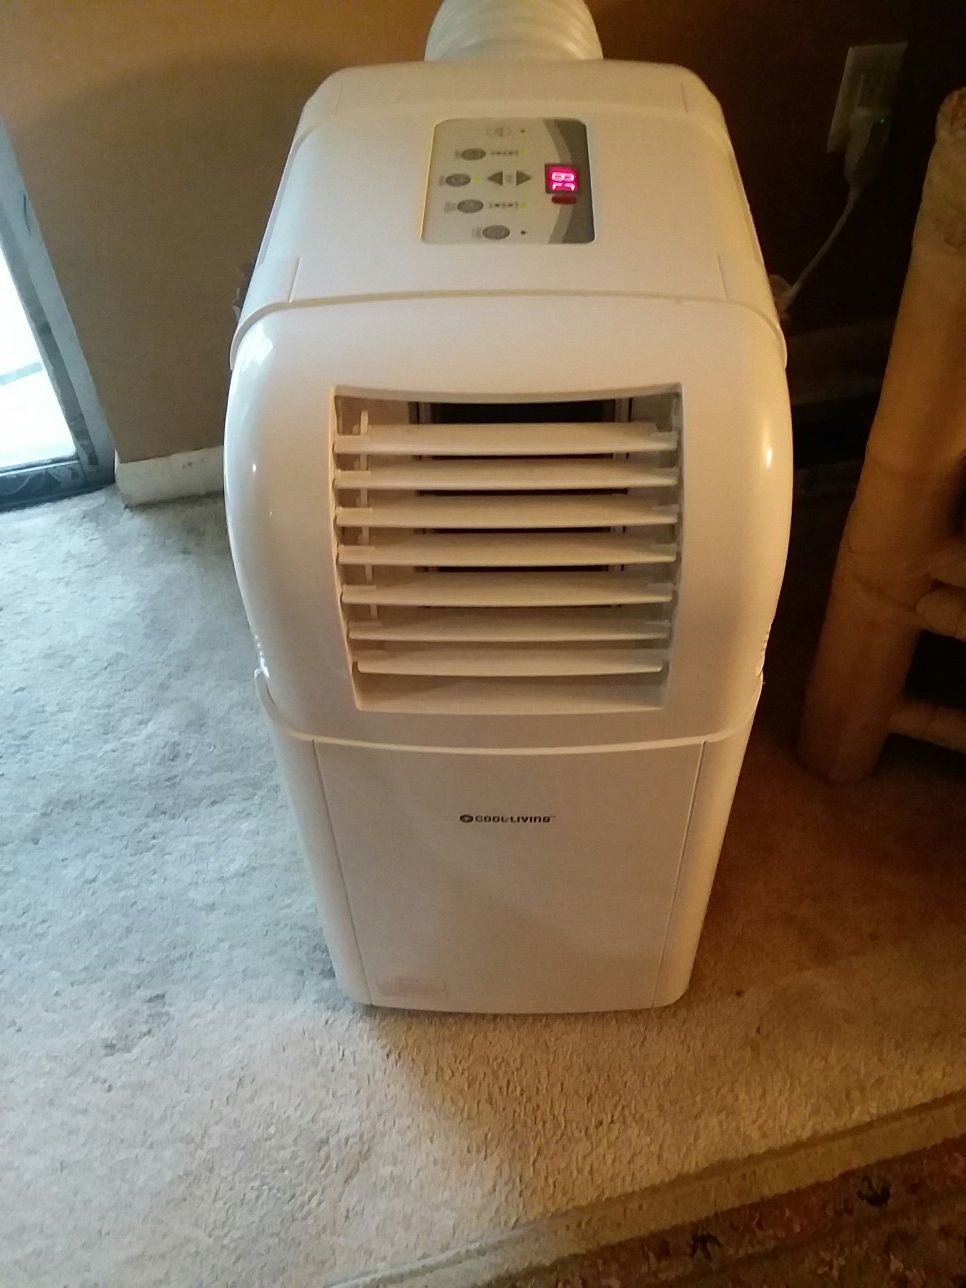 10000 BTU Portable Air Conditioner